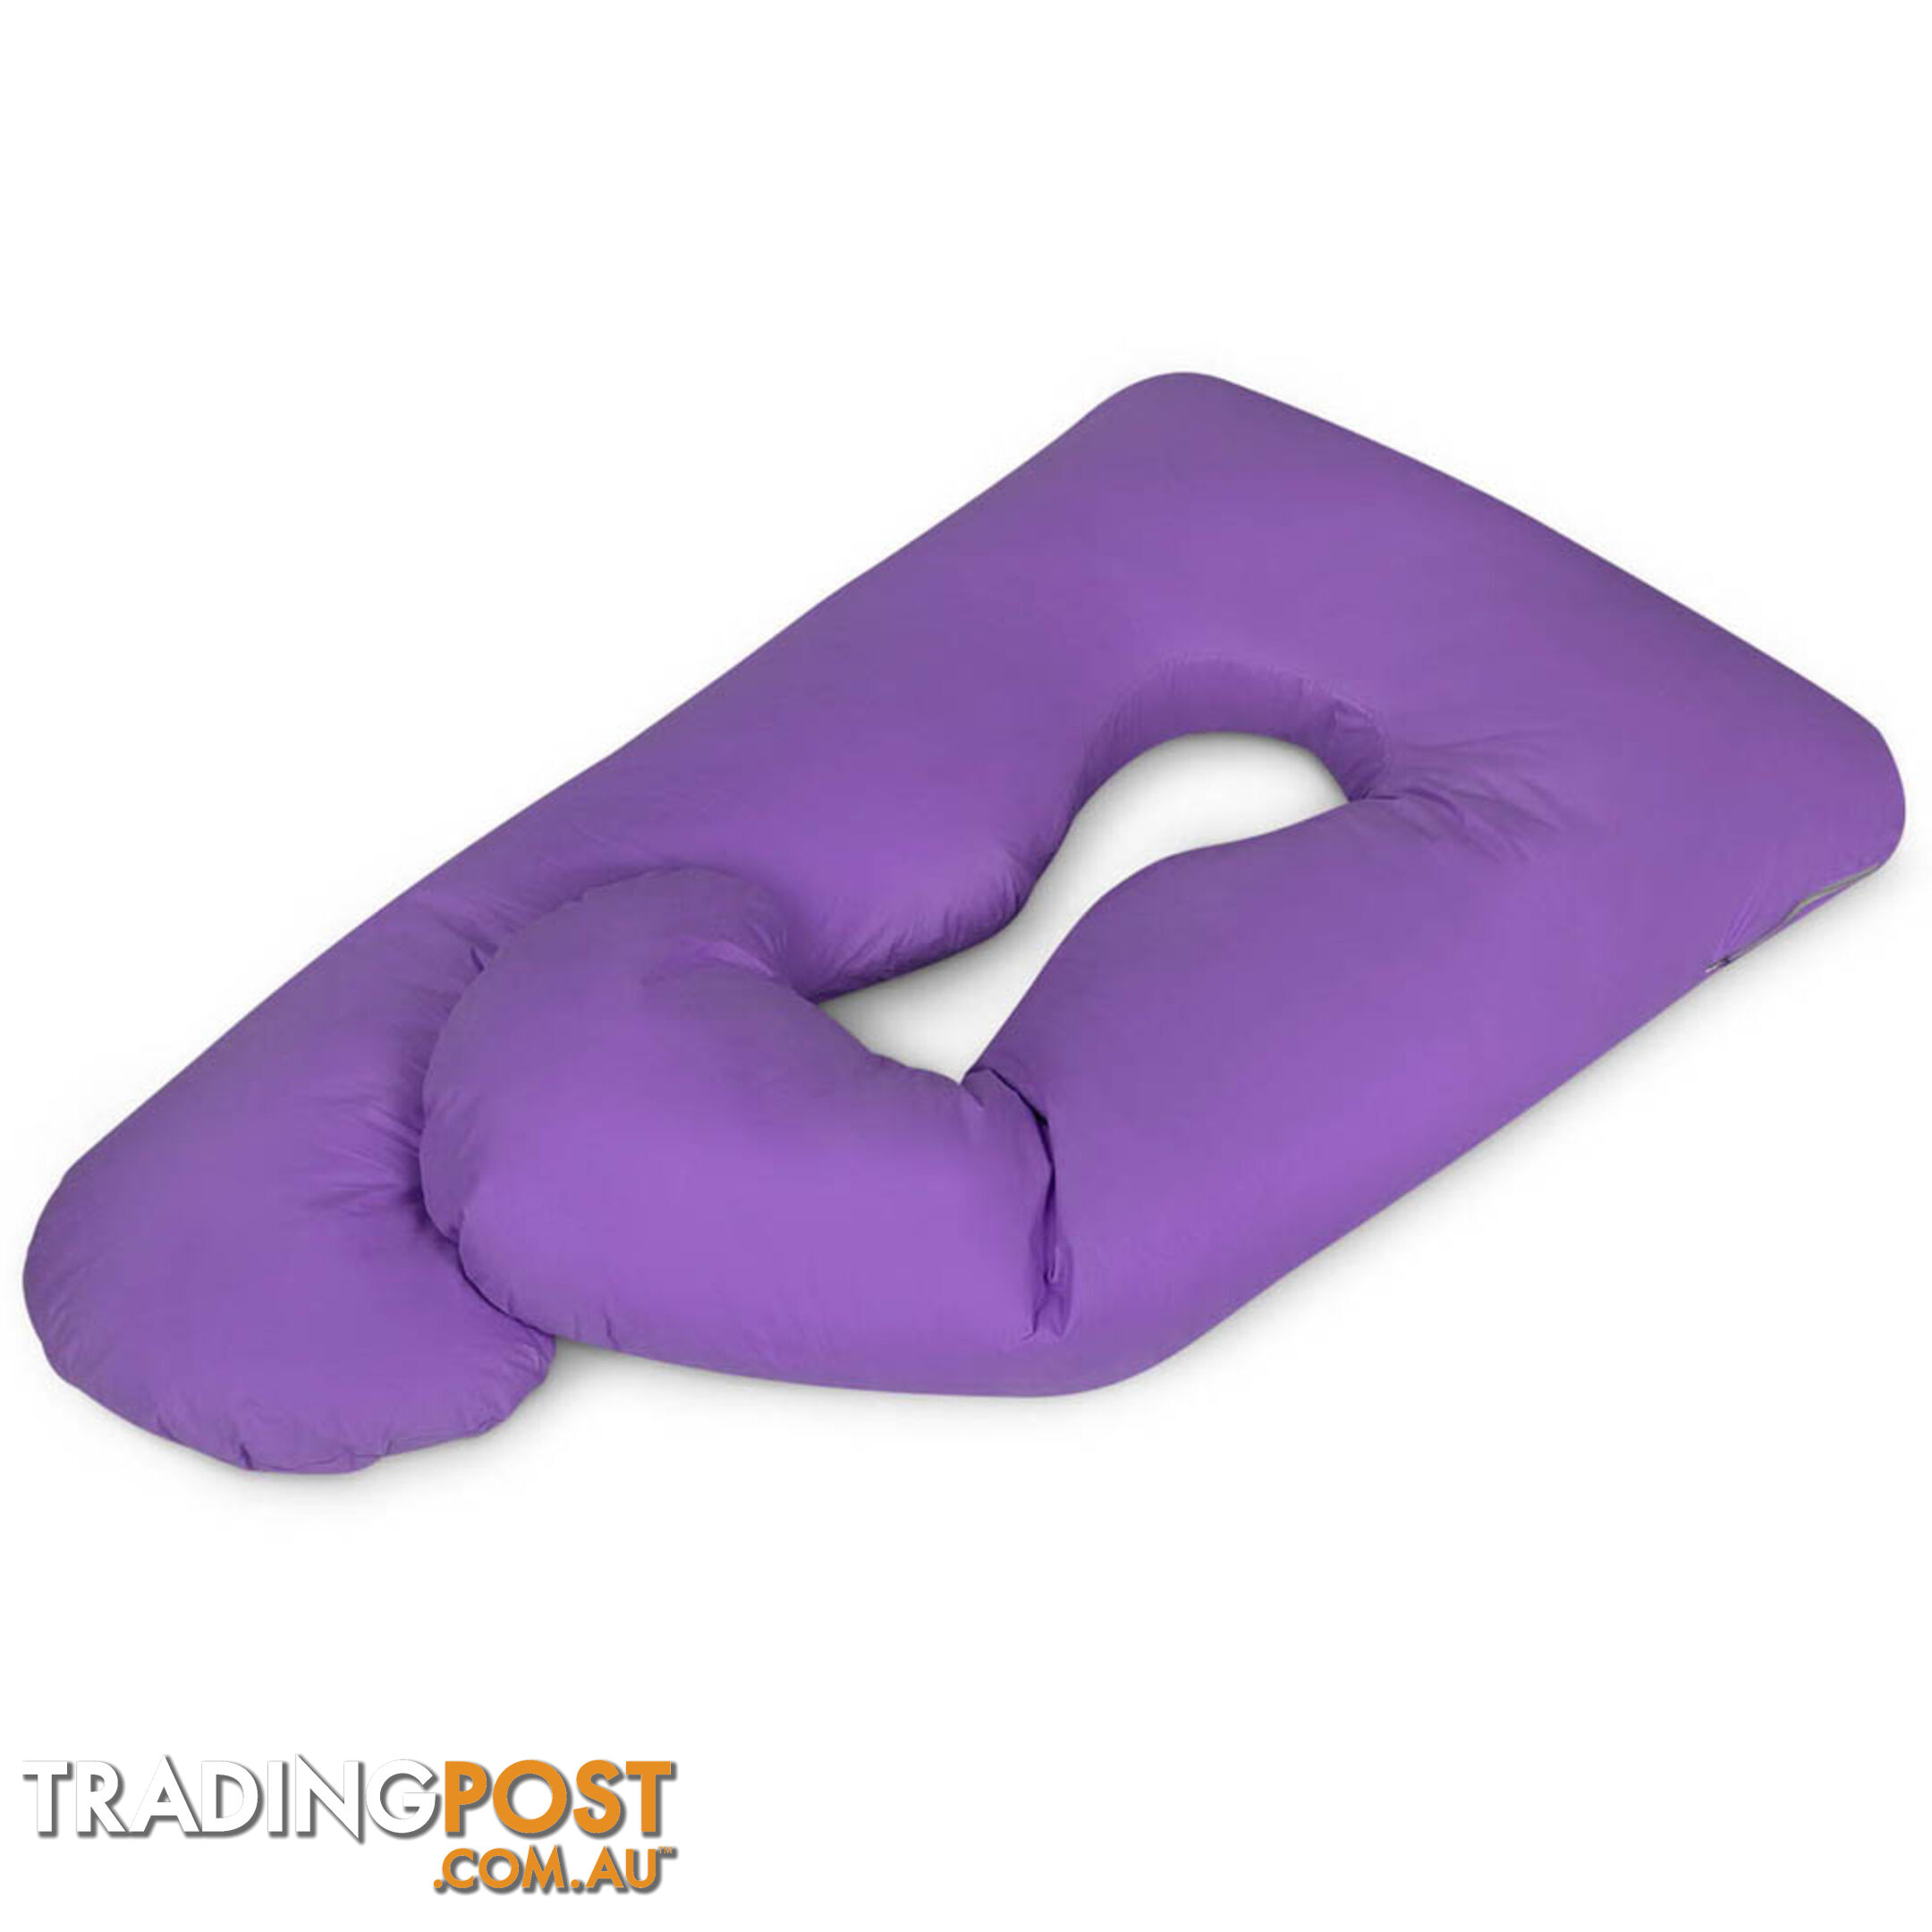 Nursing Support Pillow Feeding Baby Cushion Purple